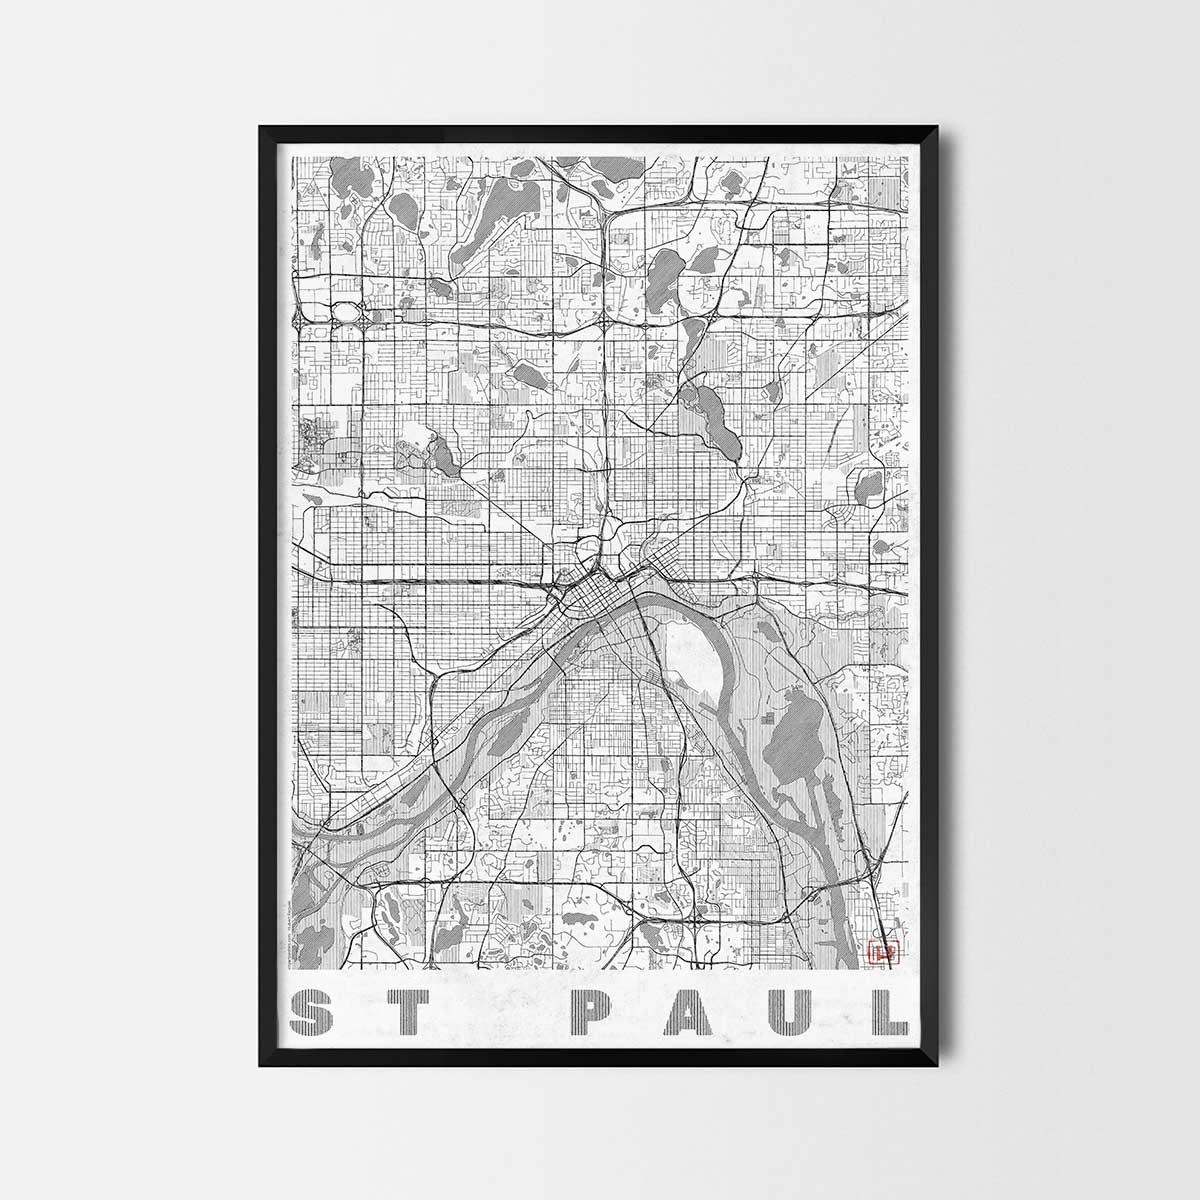 St Paul art prints city map art posters map posters city map prints city posters